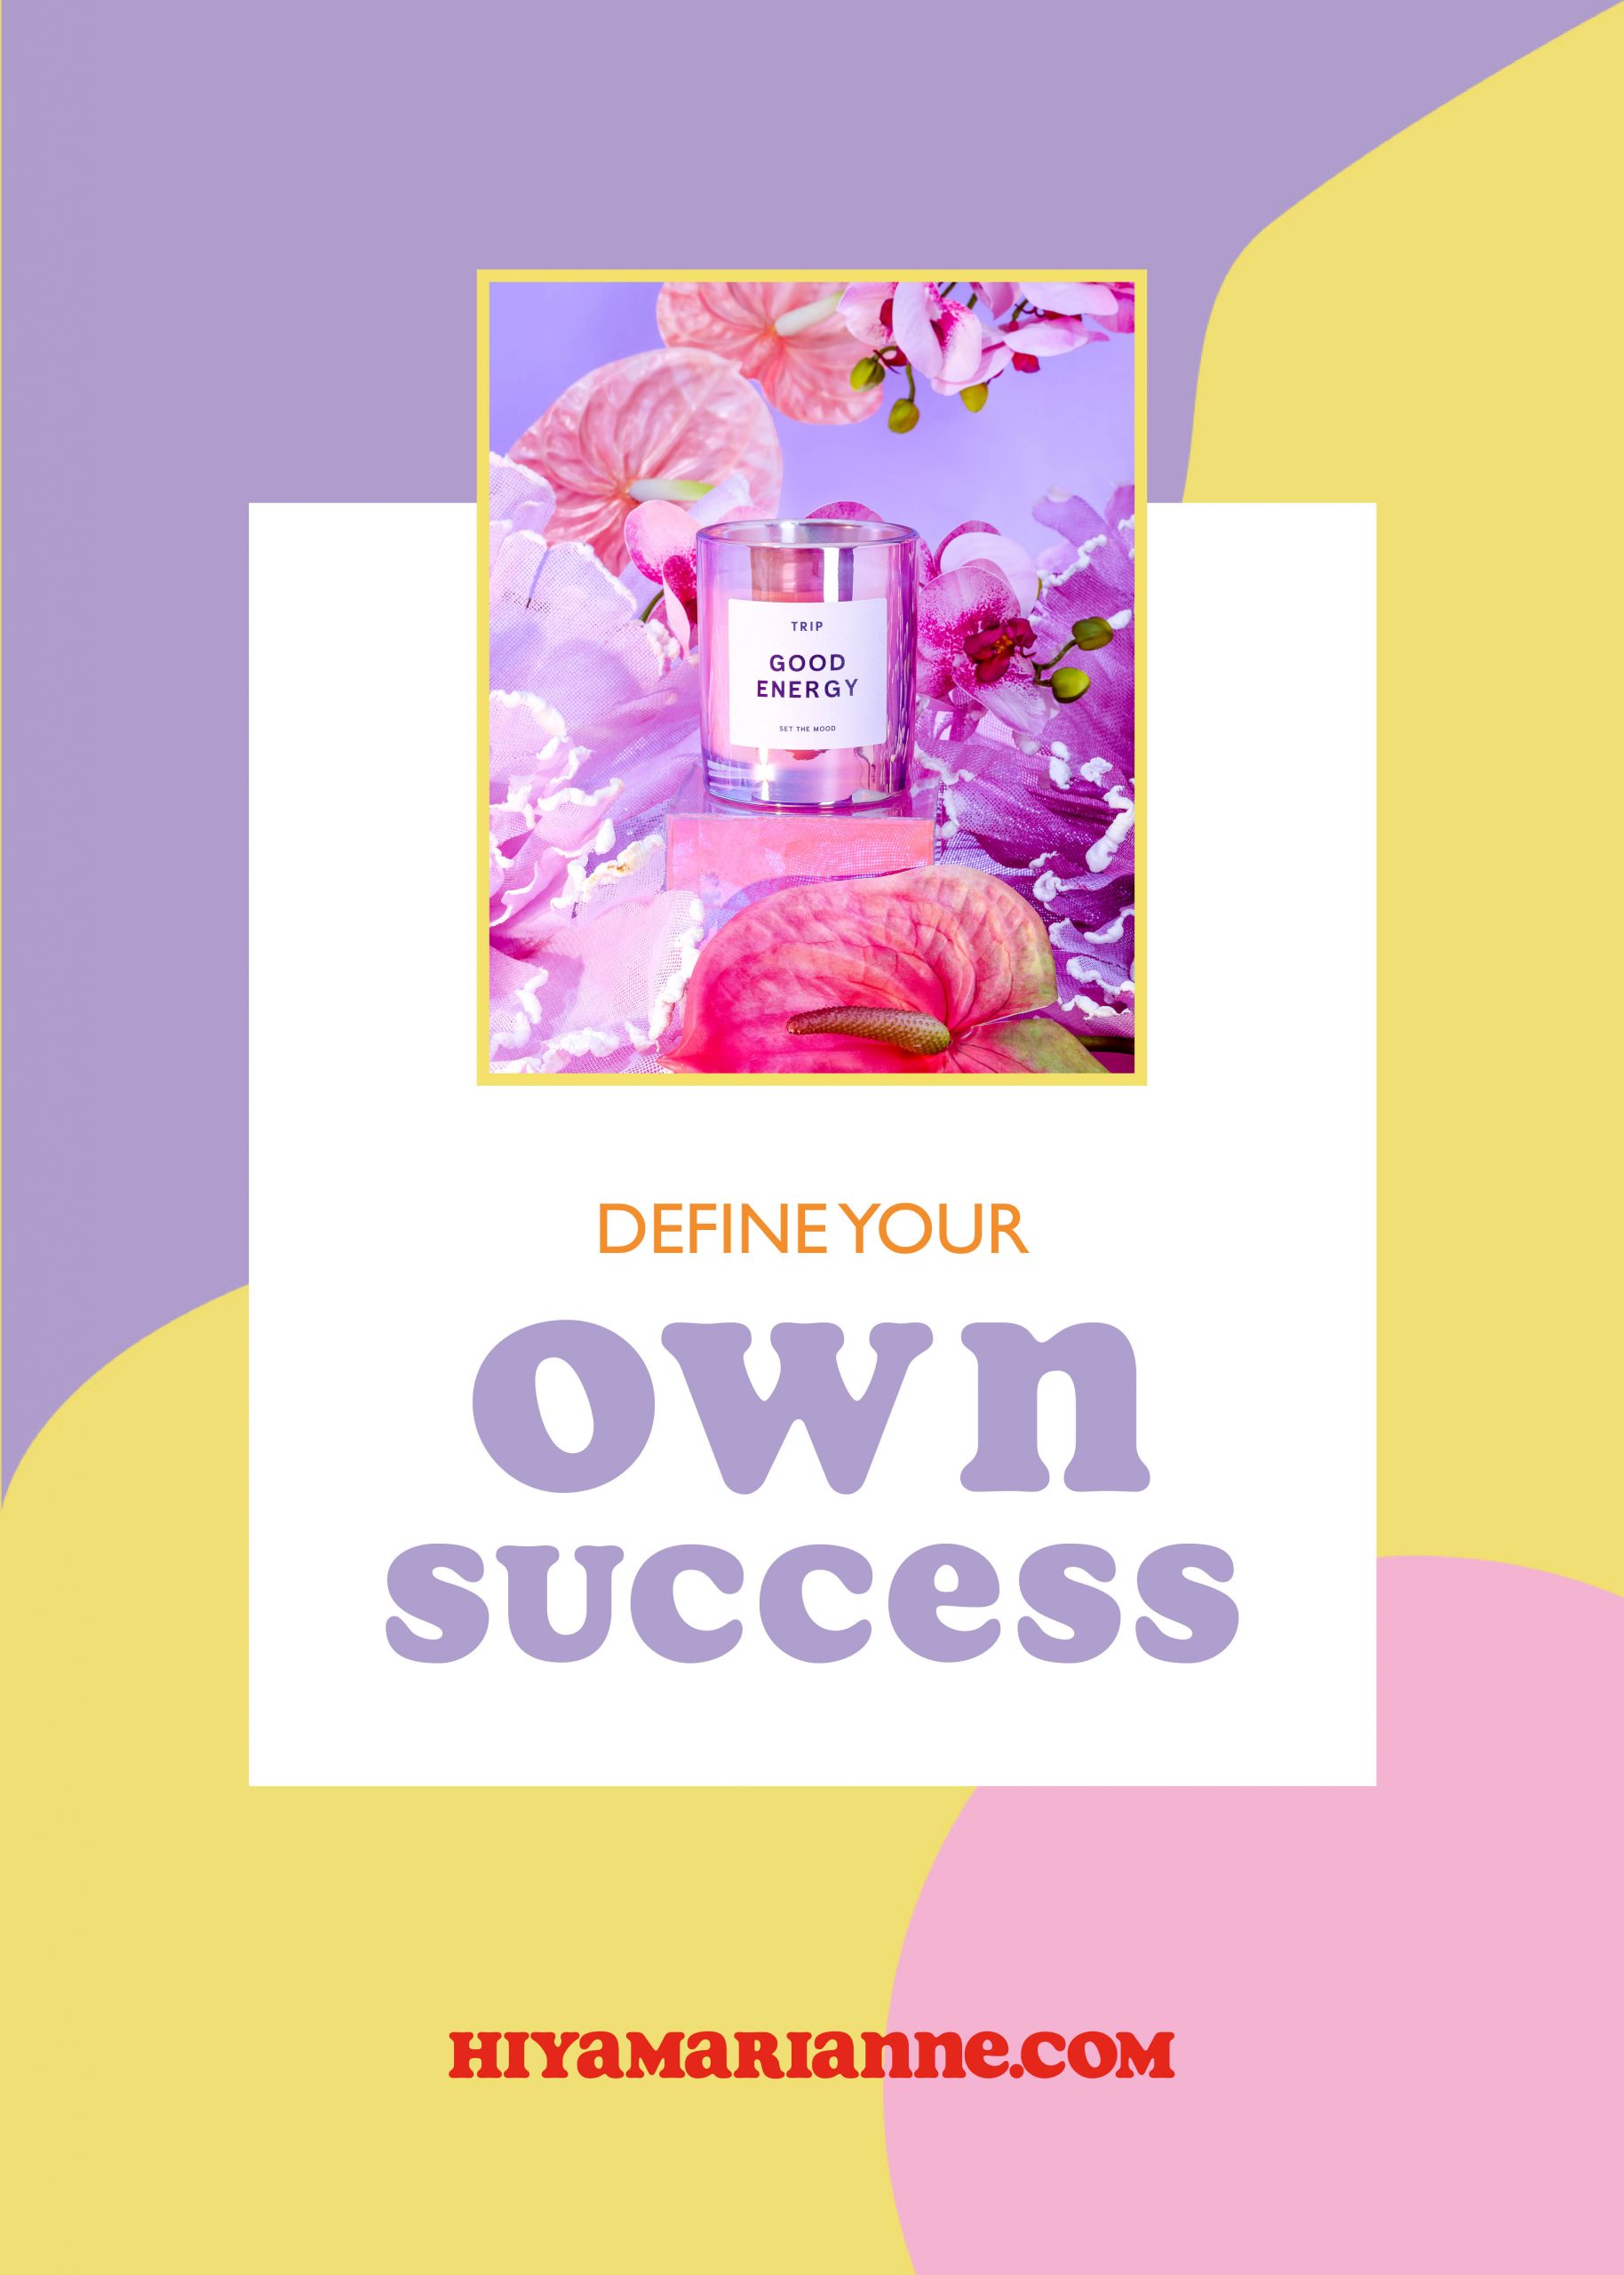 Define your own success - by HIYA MARIANNE.